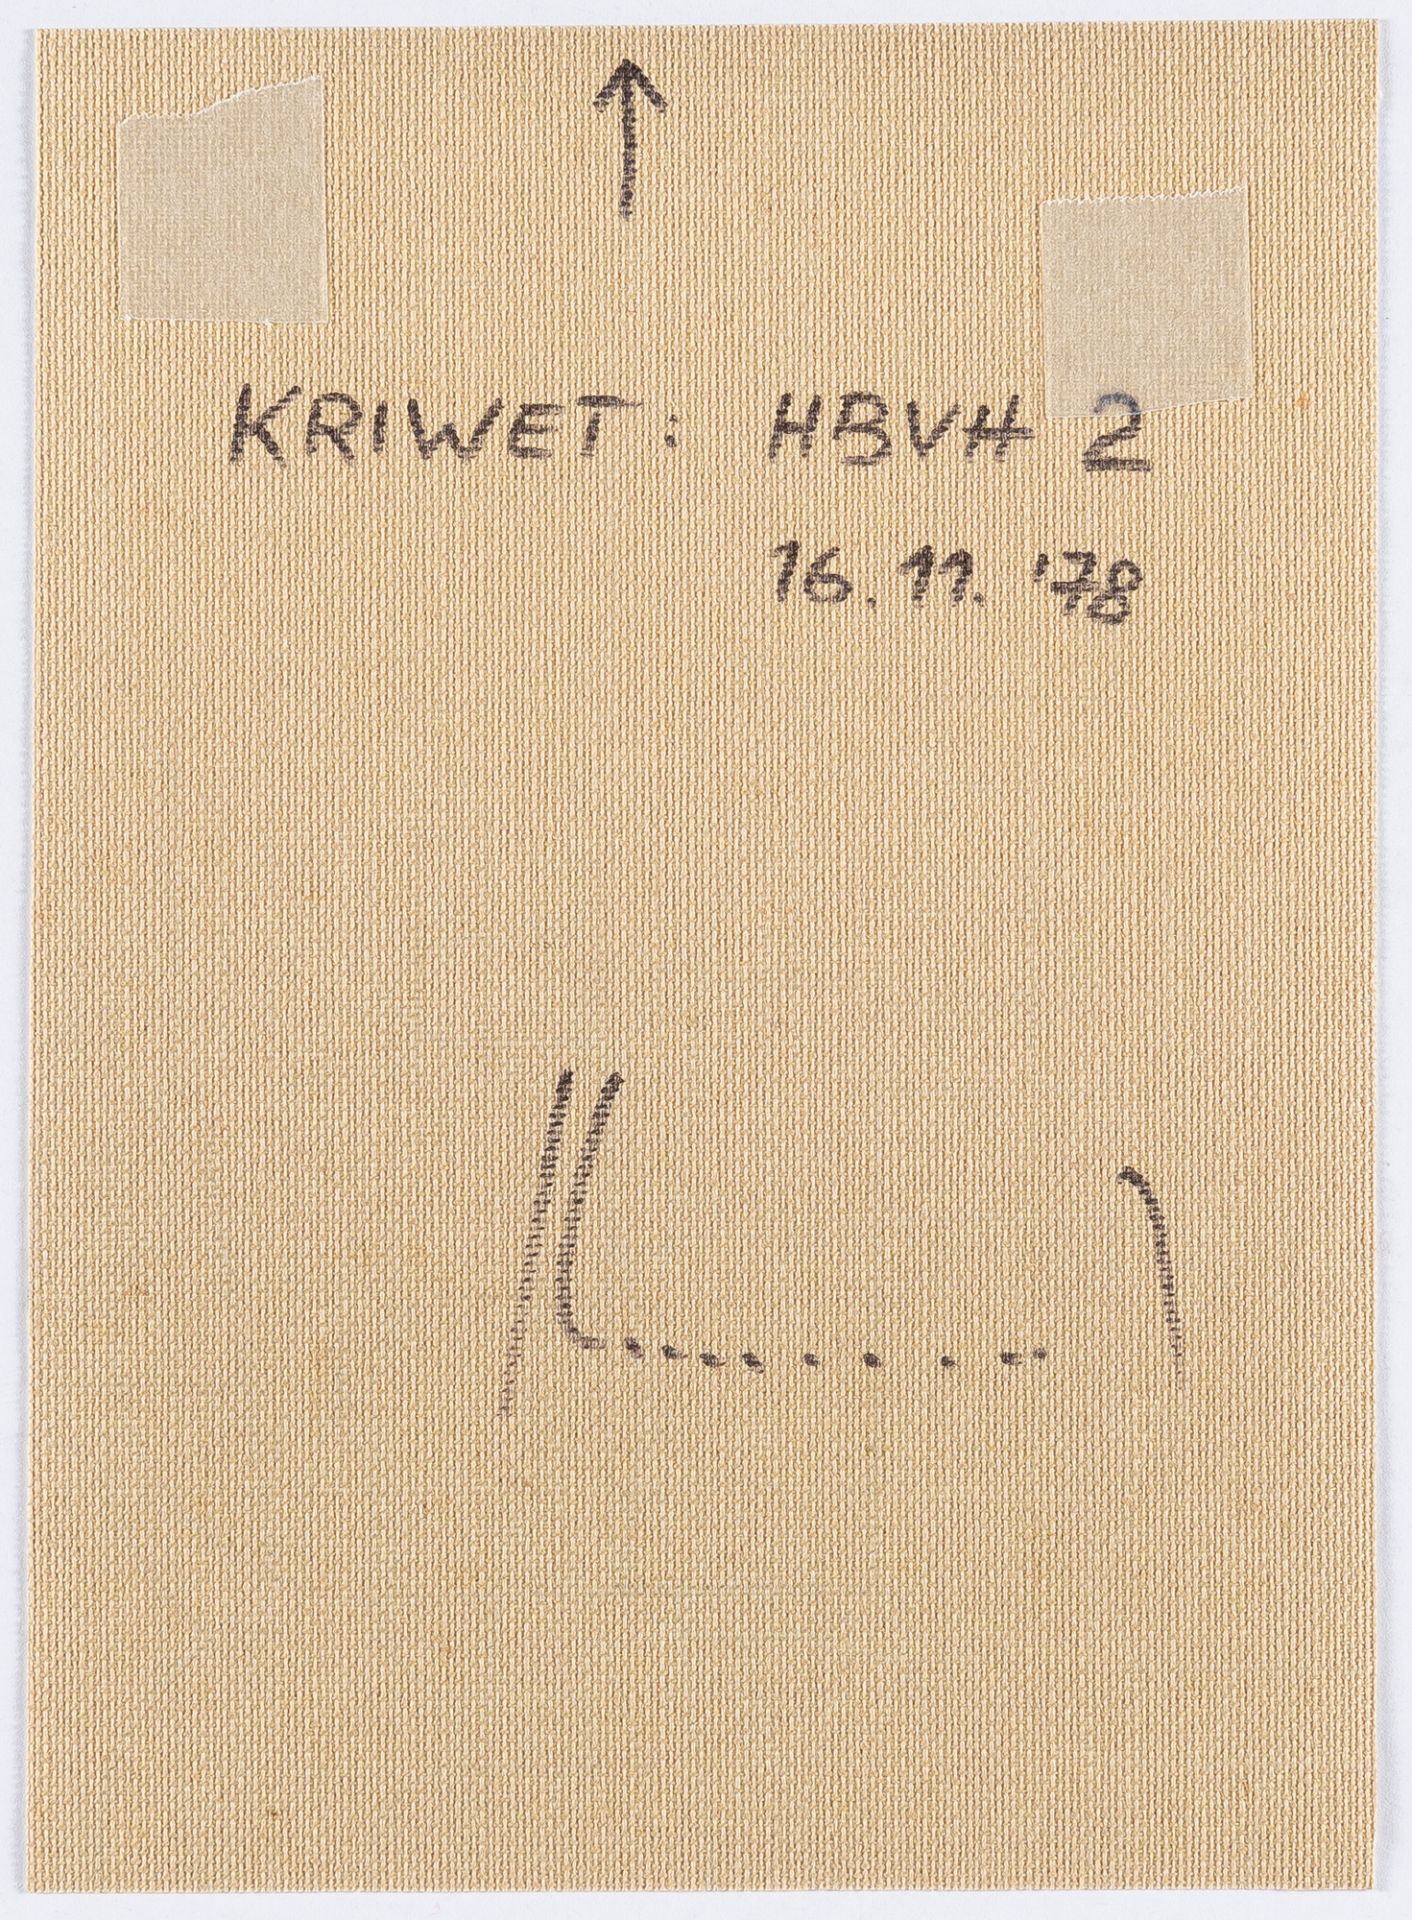 Ferdinand Kriwet - Image 3 of 3